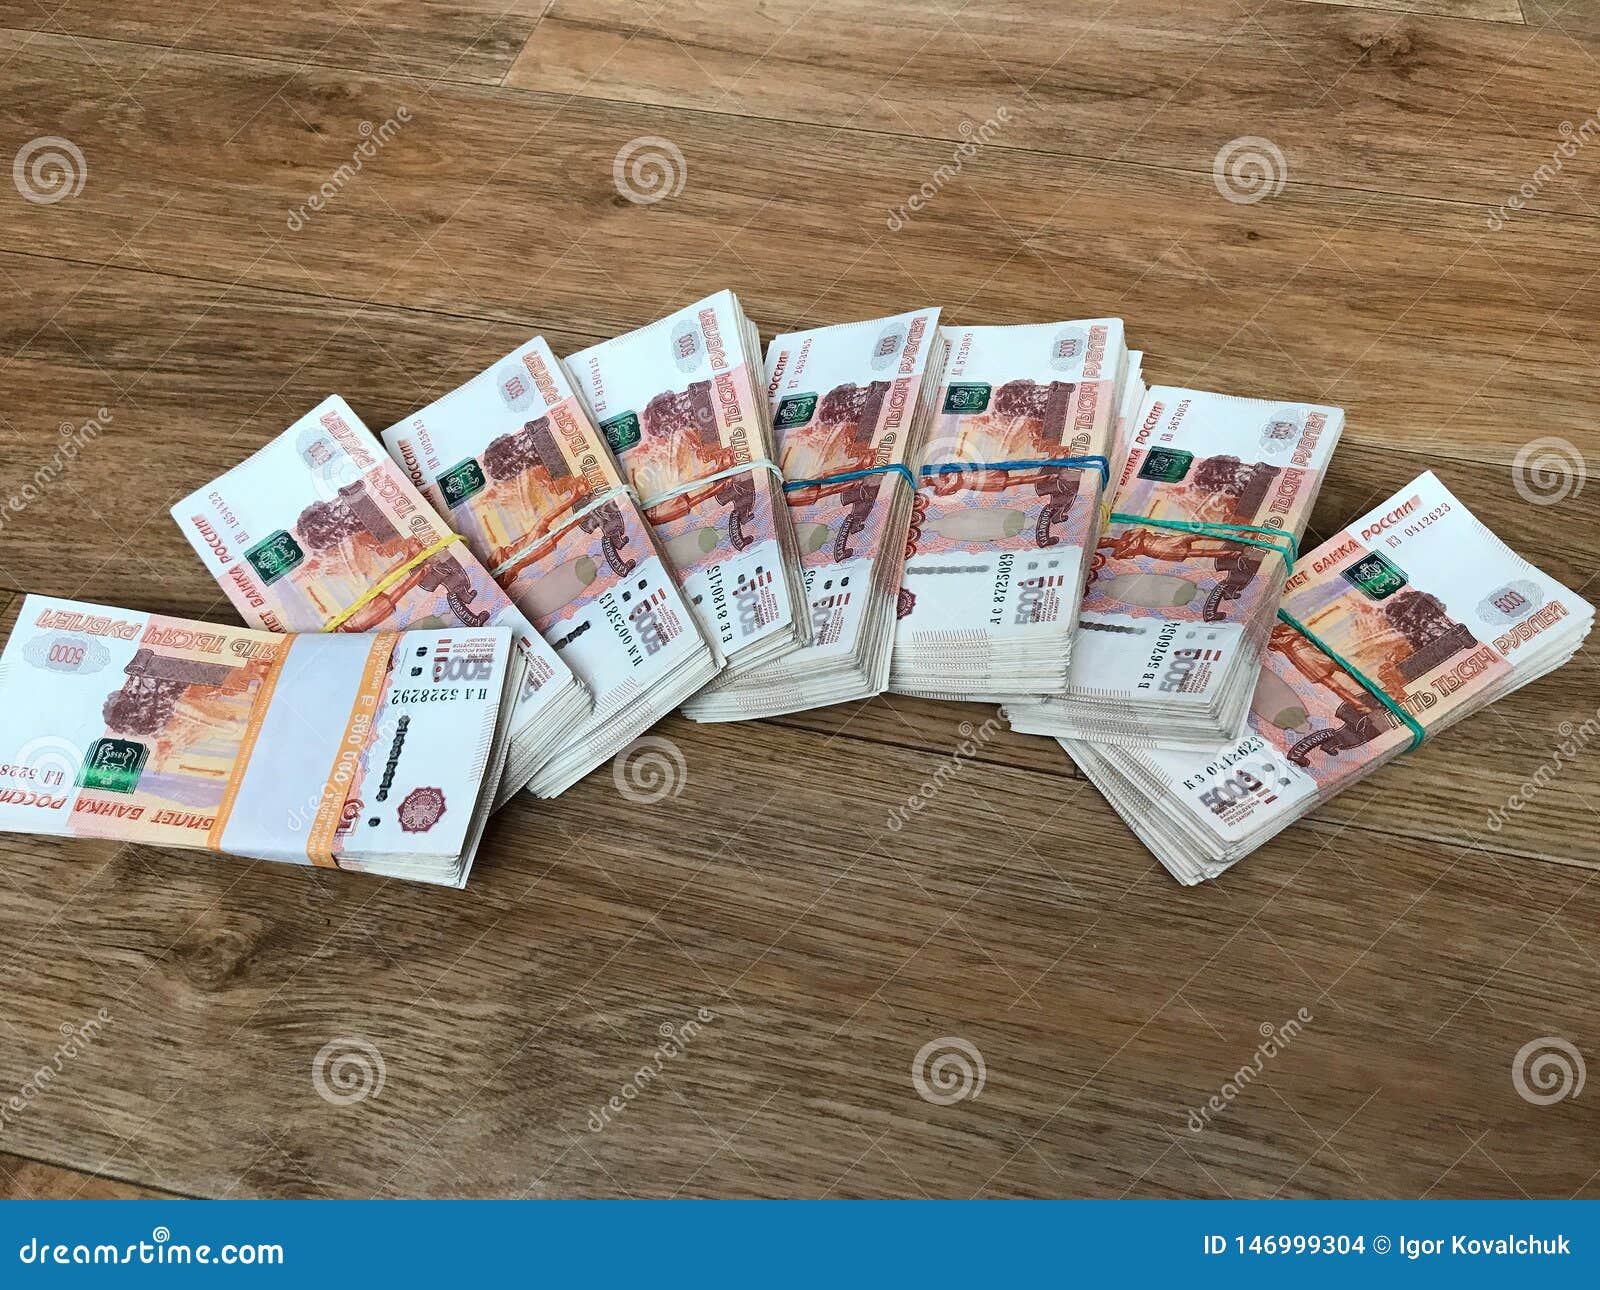 stack-bills-packs-russian-ruble-money-floor-146999304.jpg